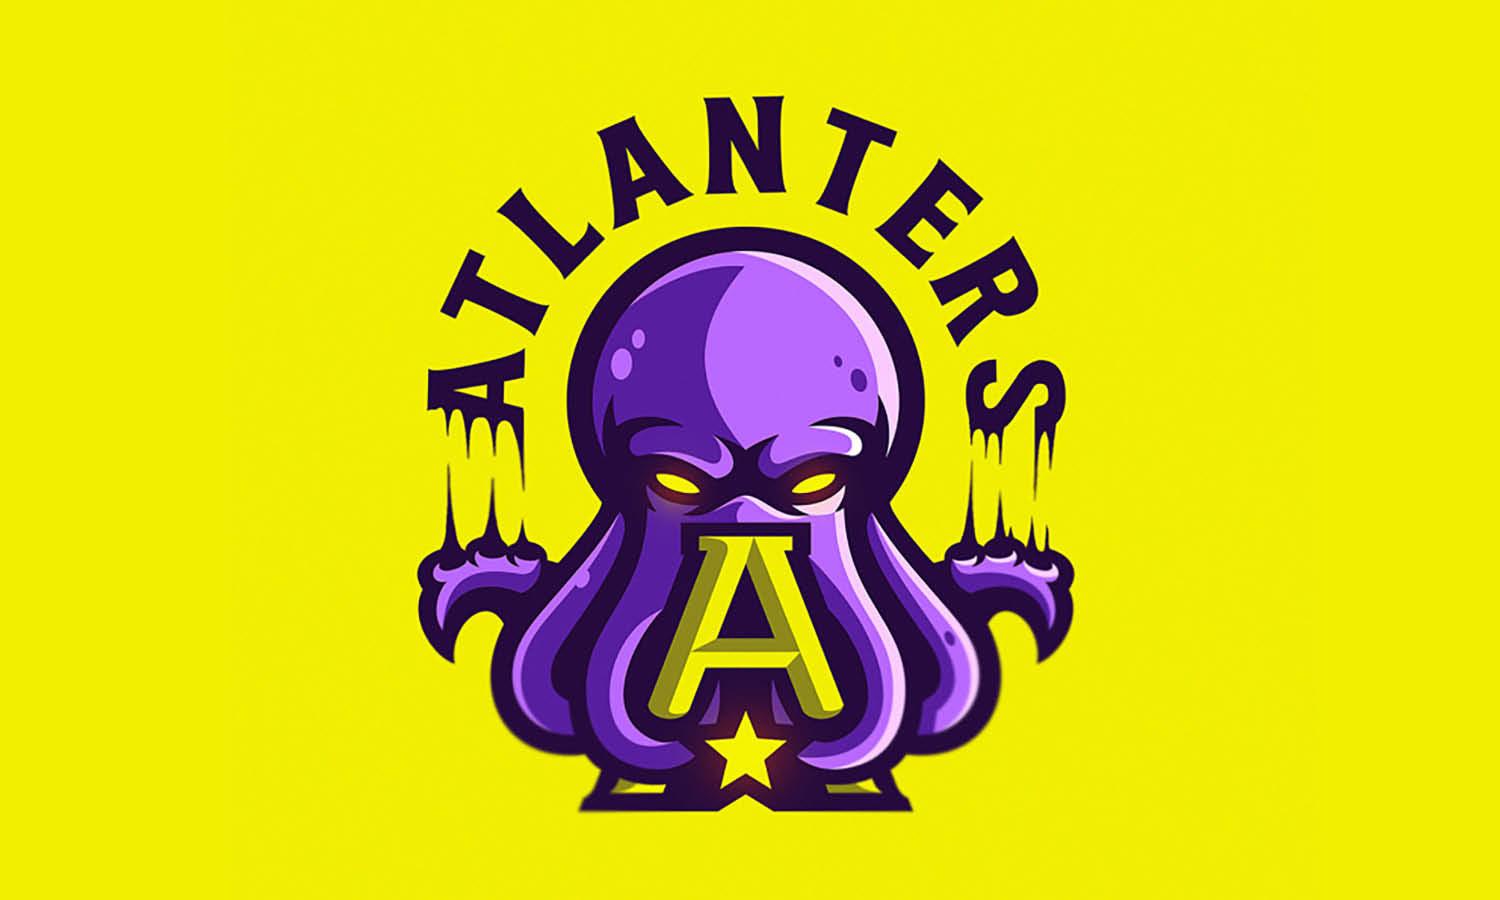 Image Details IST_37927_03065 - giant octopus logo